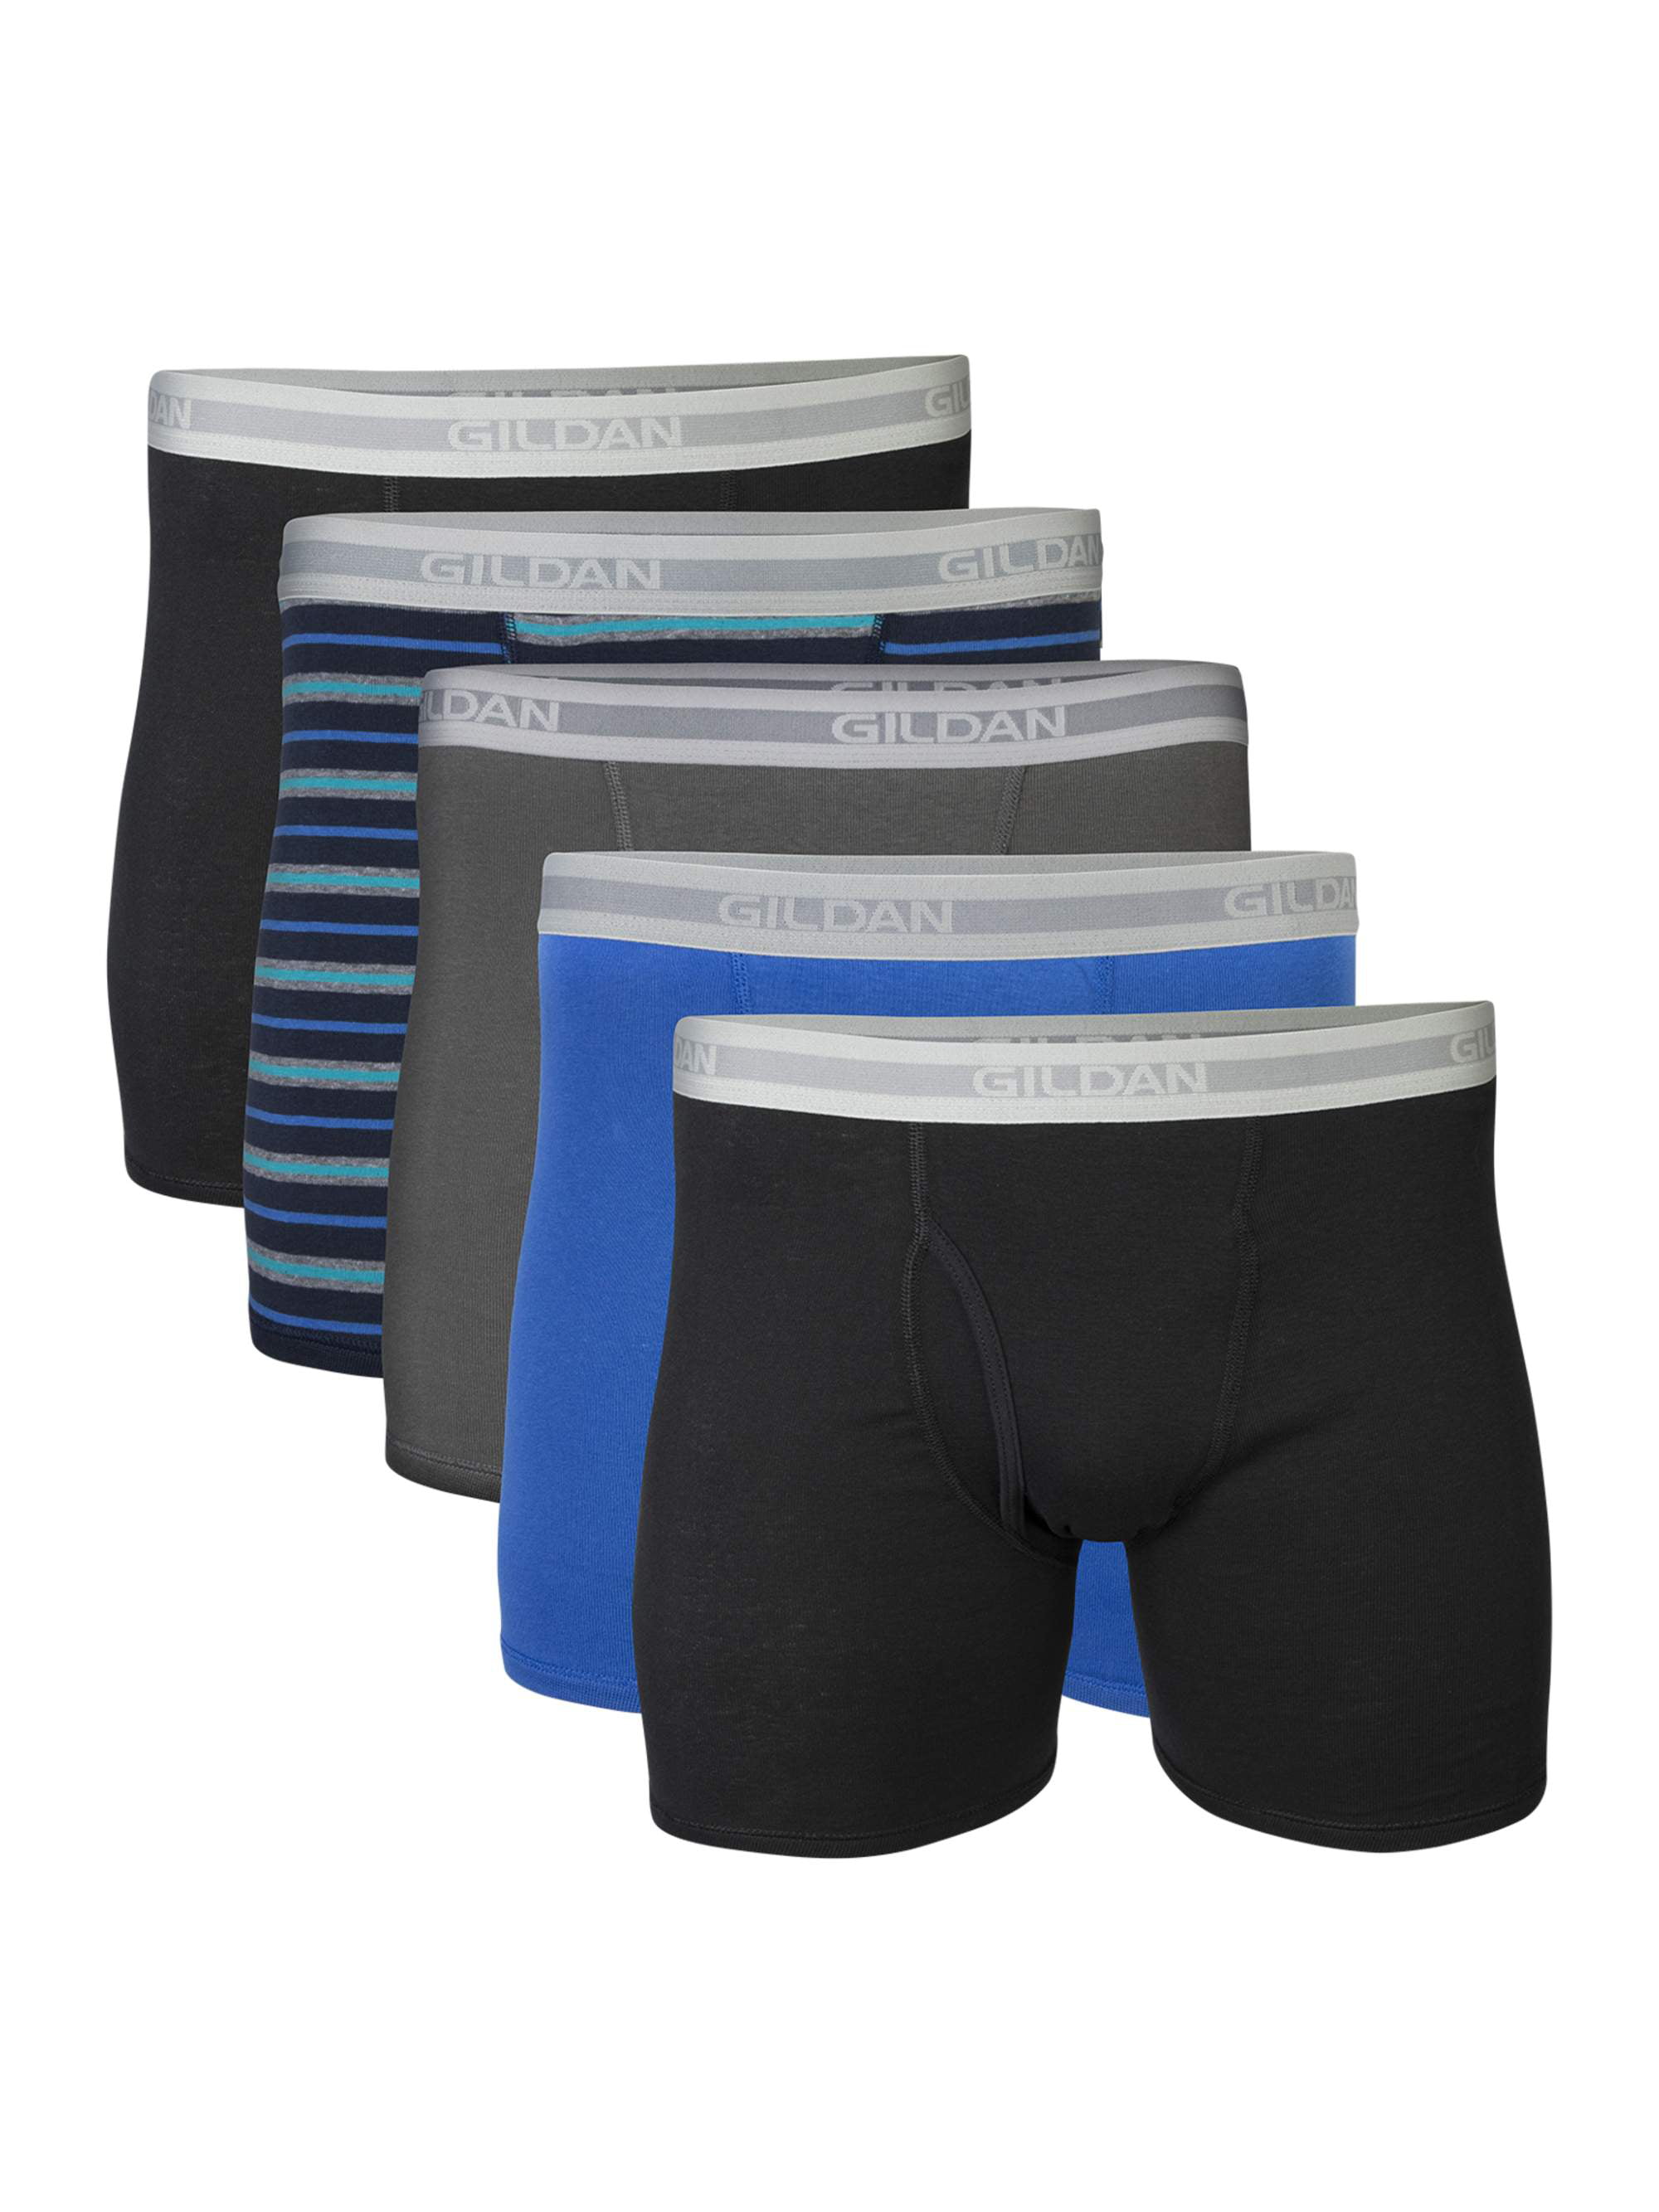 Mens 2-Pack Boxer Briefs Polyester Underwear Trunk Underwear with Reading Sloth Design